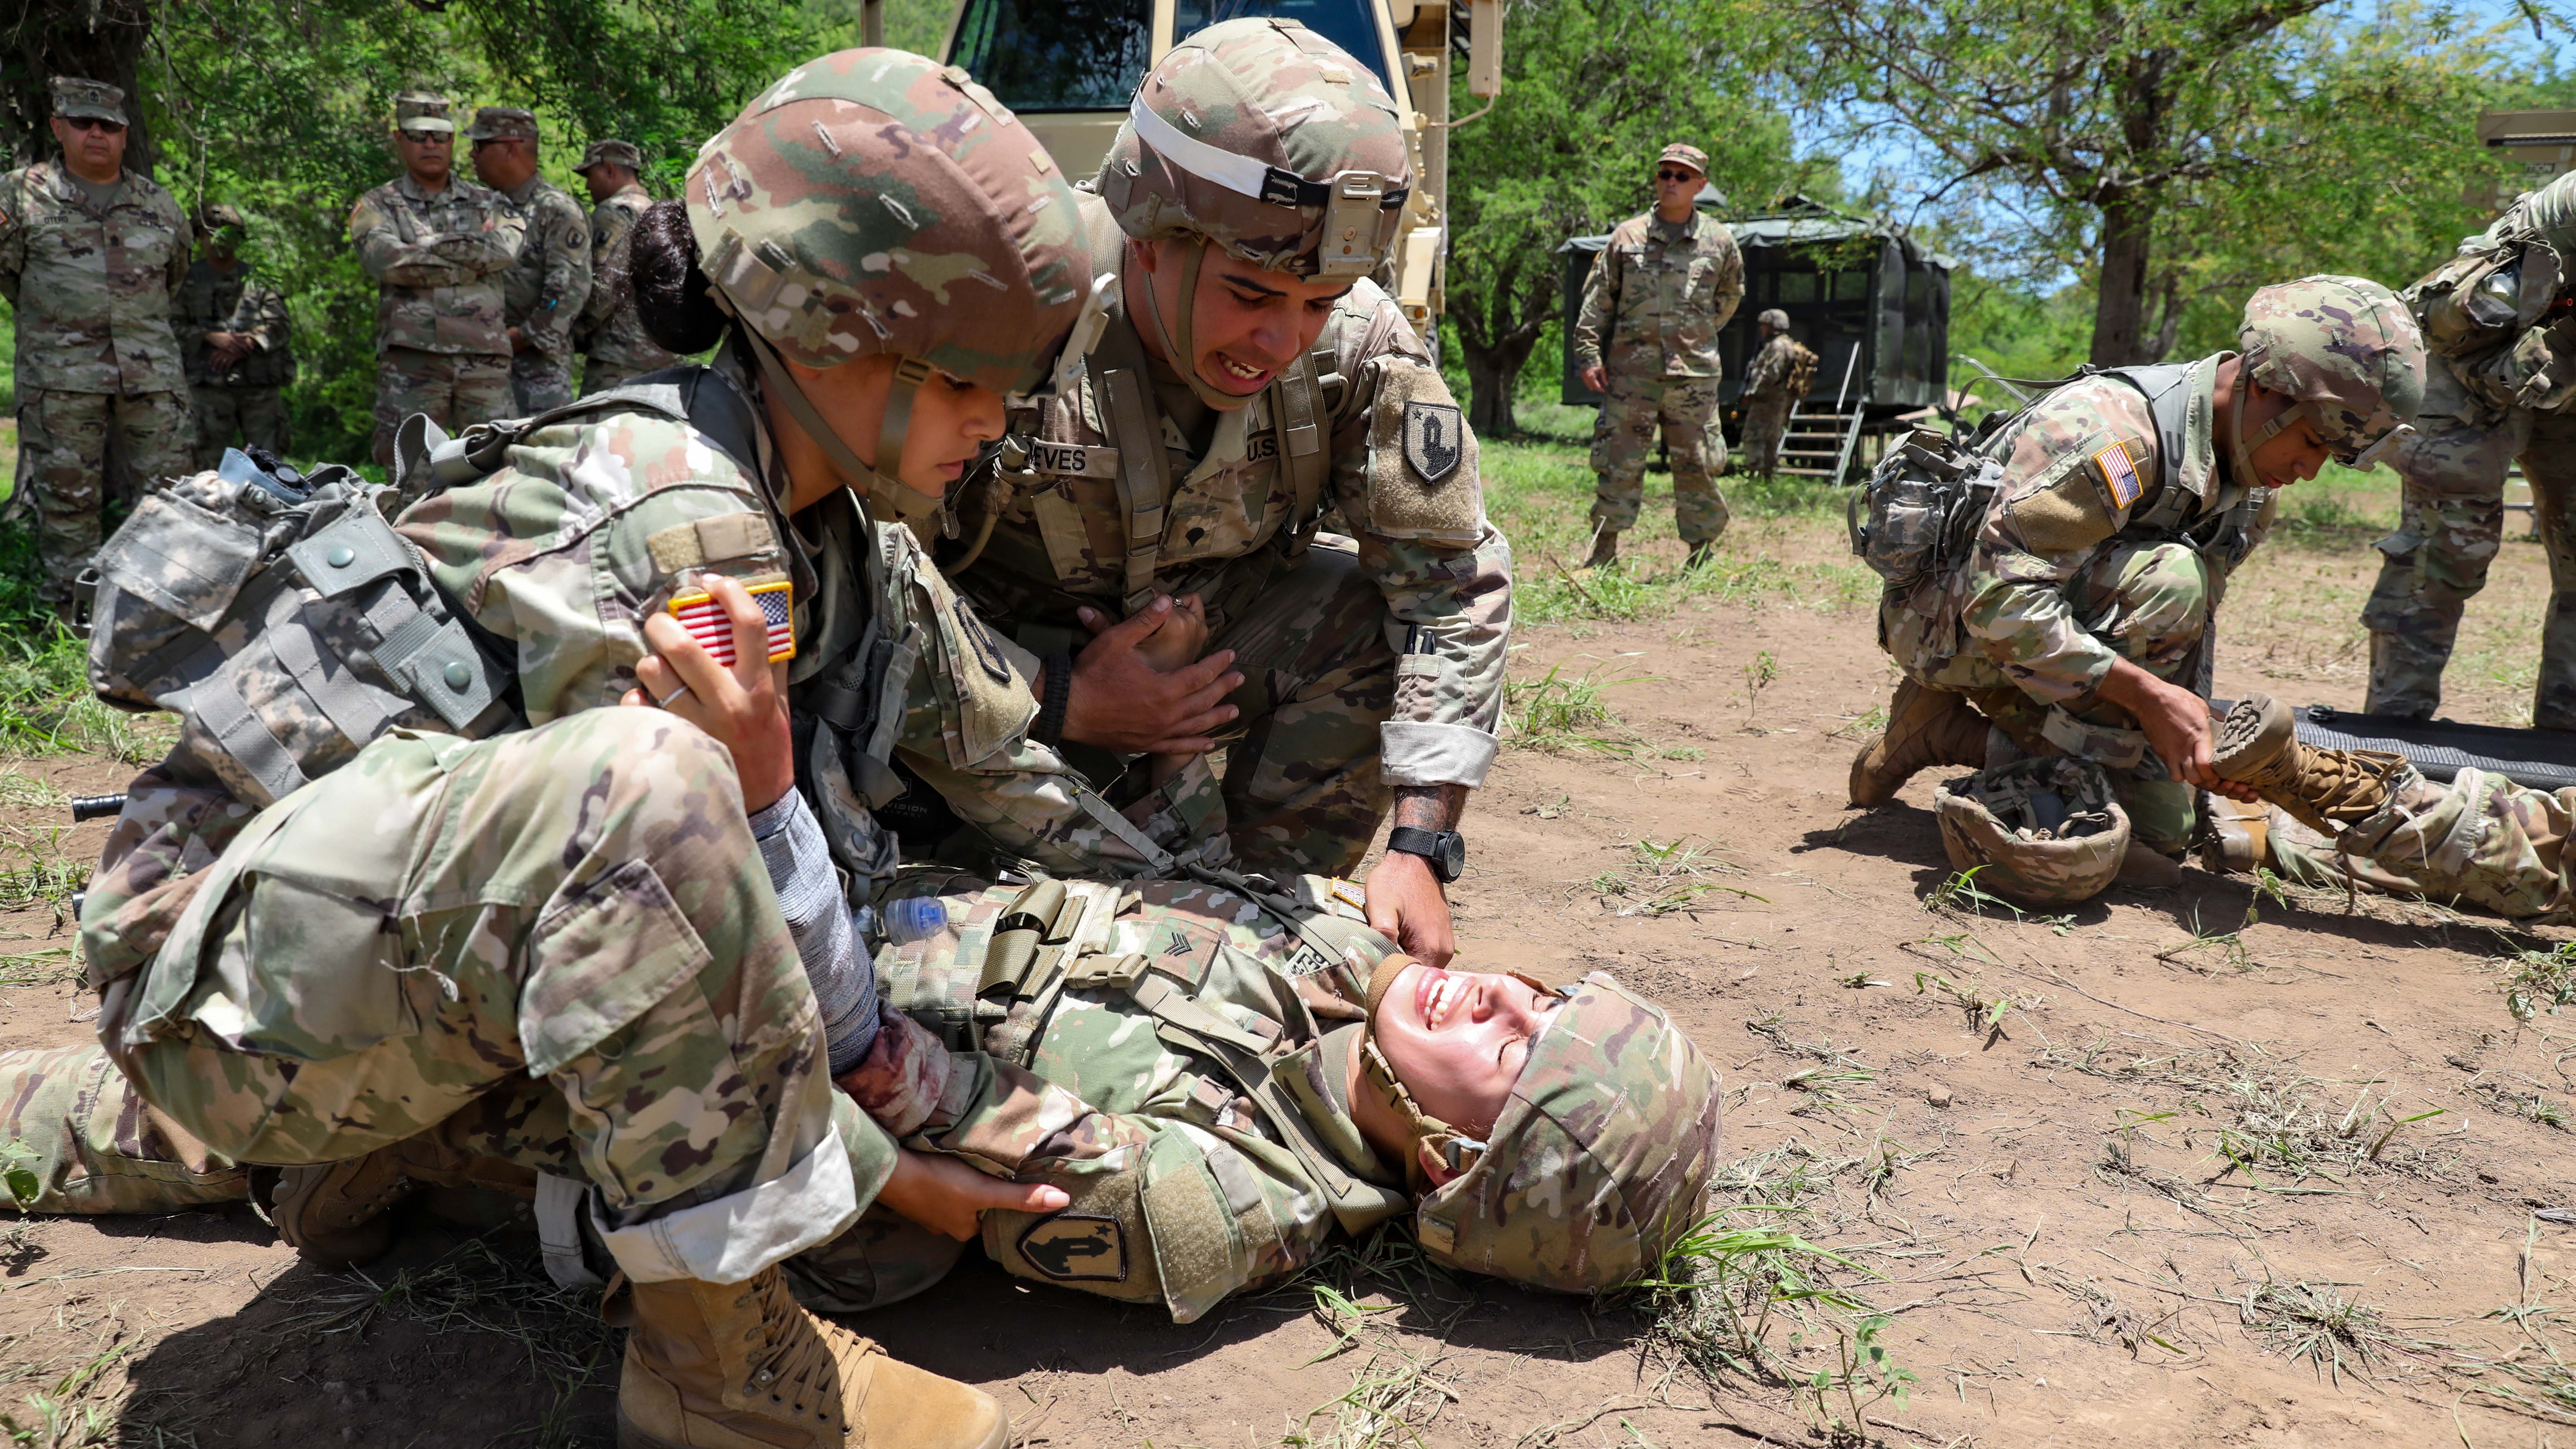 Army medics participate in training.